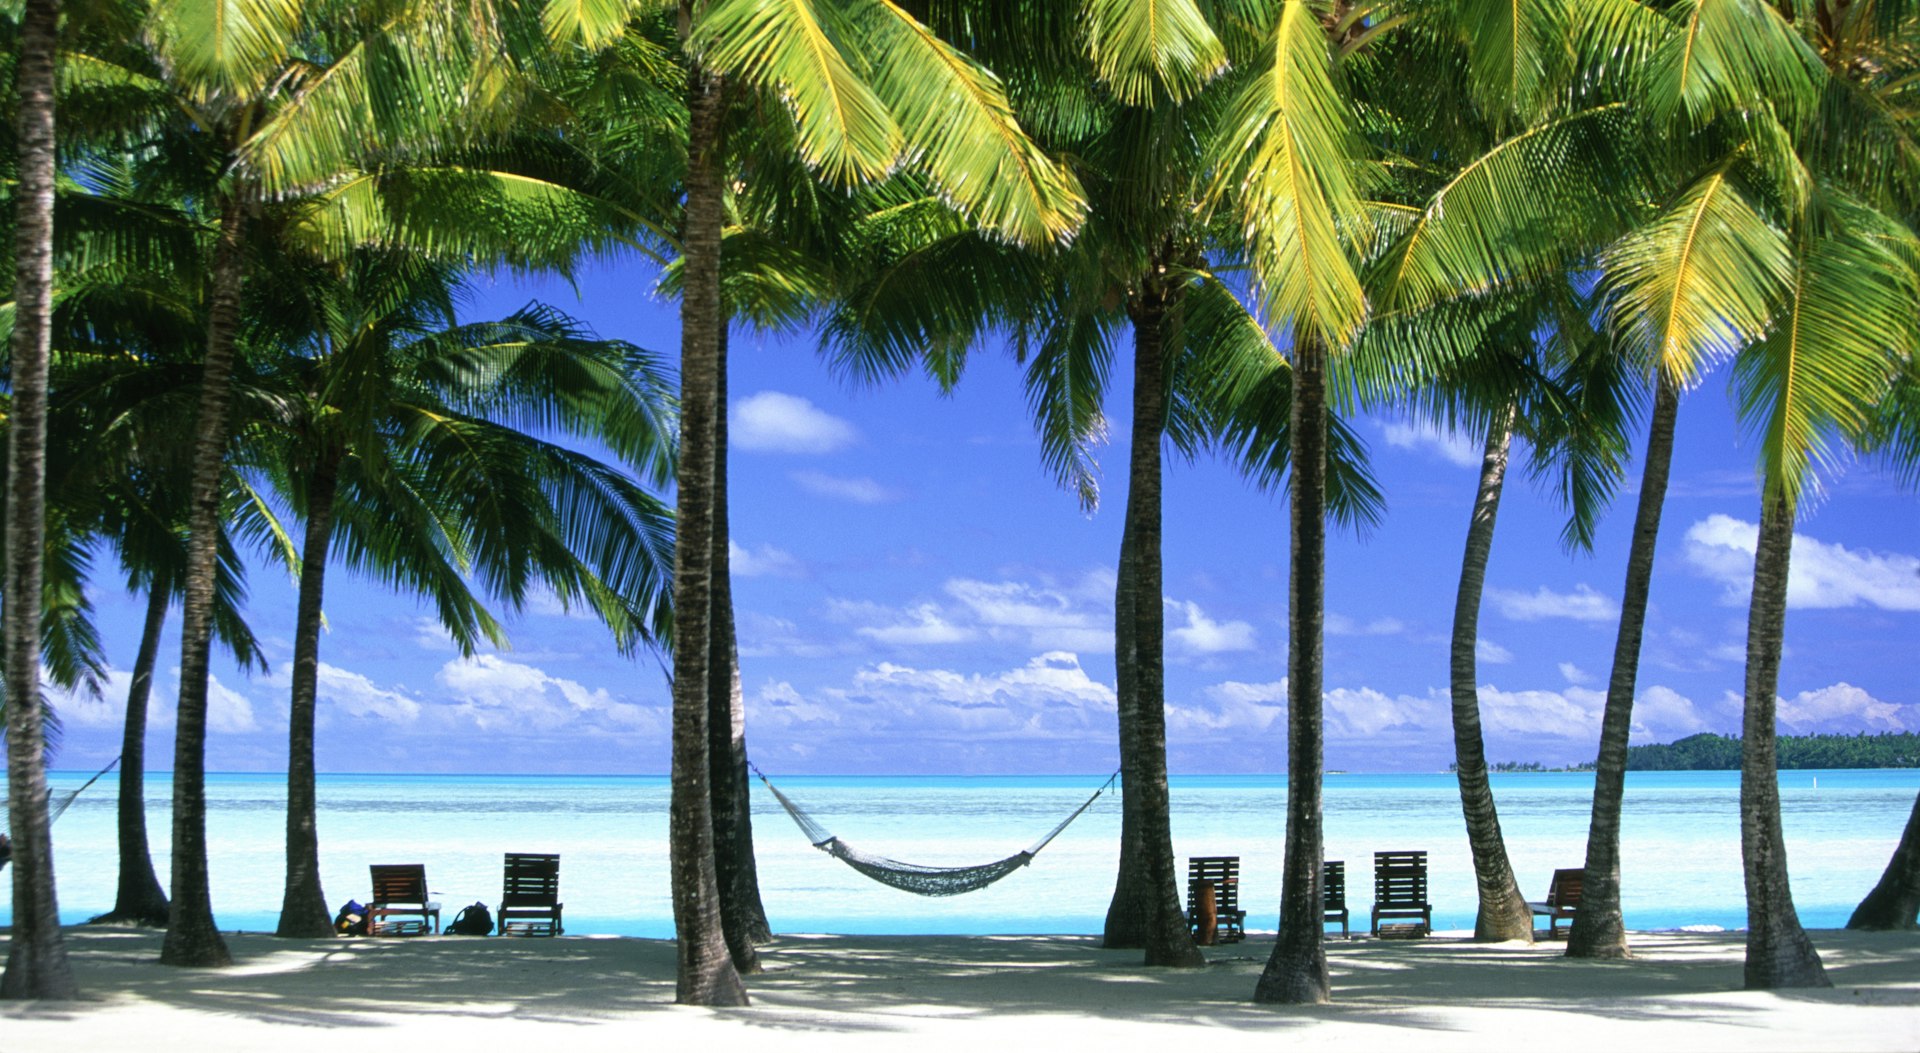 Palm trees and a hammock on Aitutaki, Cook Islands